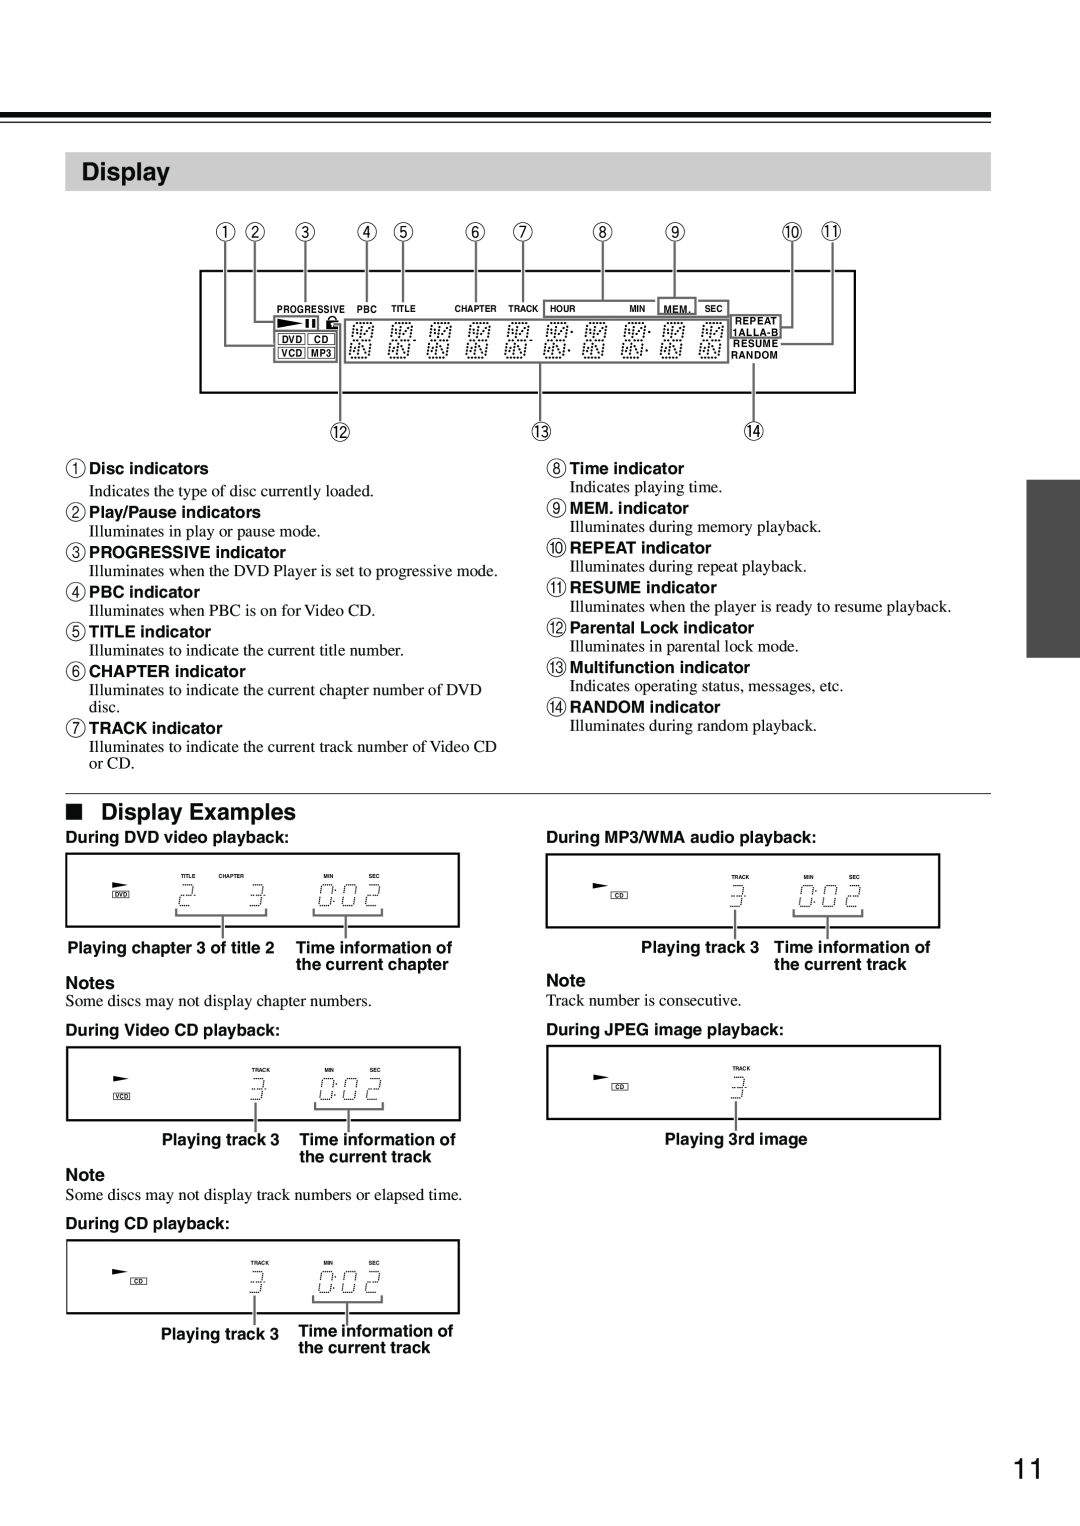 Onkyo DV-SP302 instruction manual Display Examples 